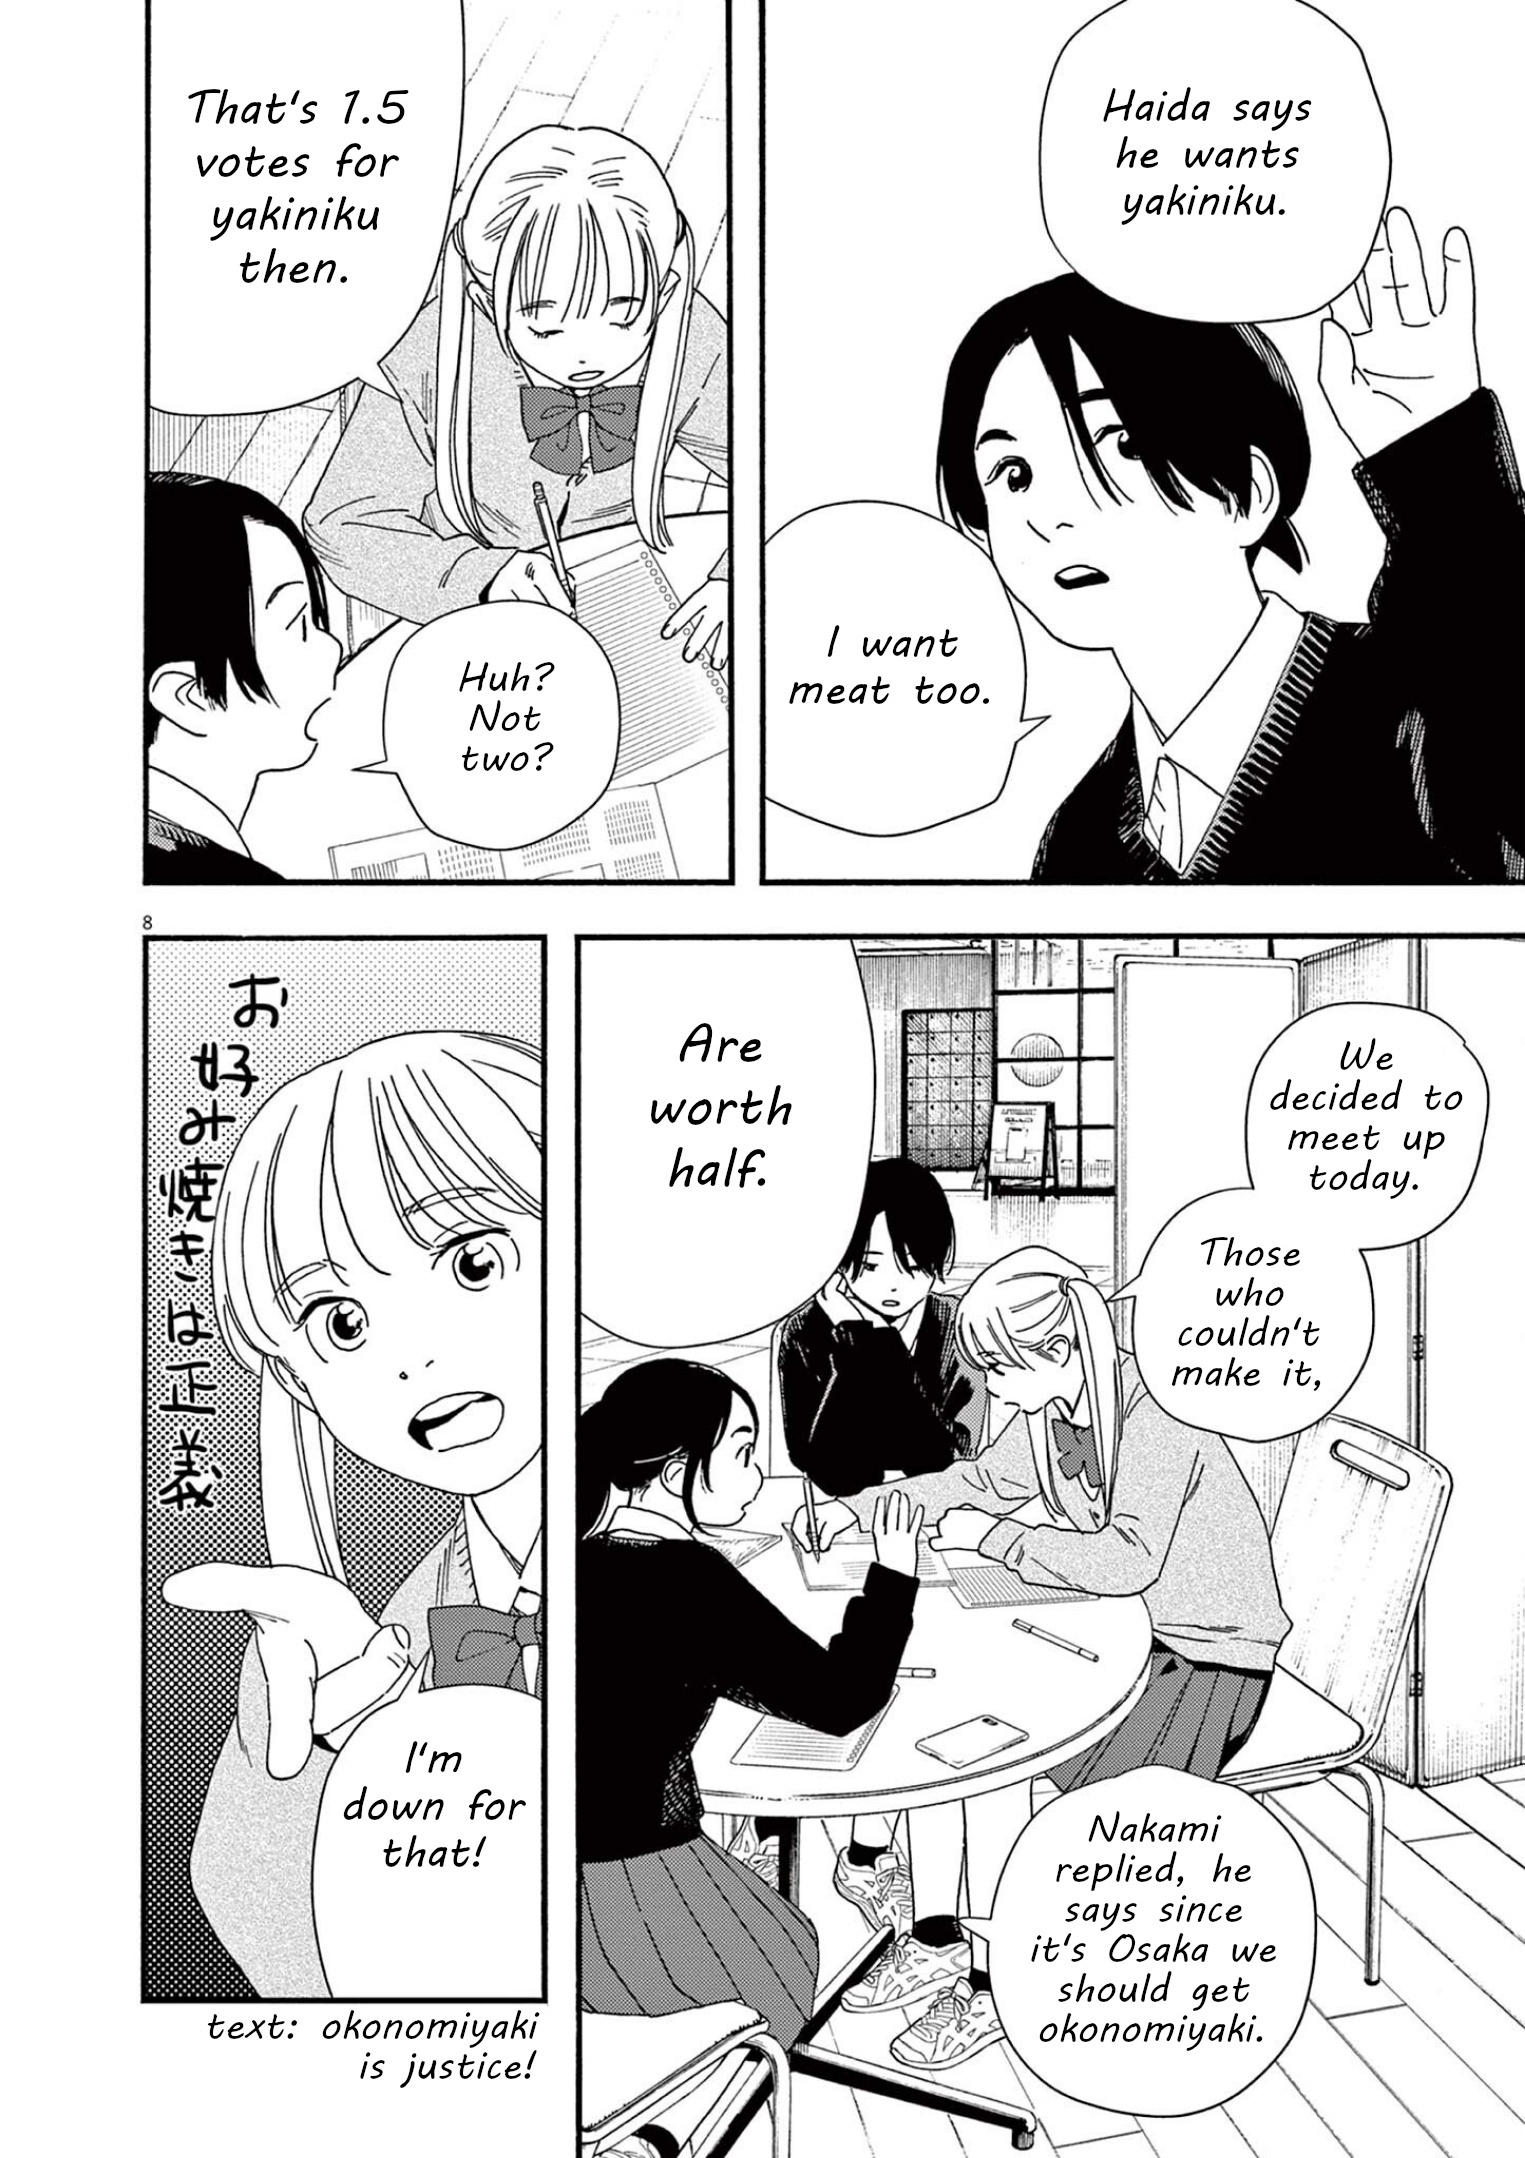 Japanese Manga Comic Book Kimi wa Houkago Insomnia 君は放課後